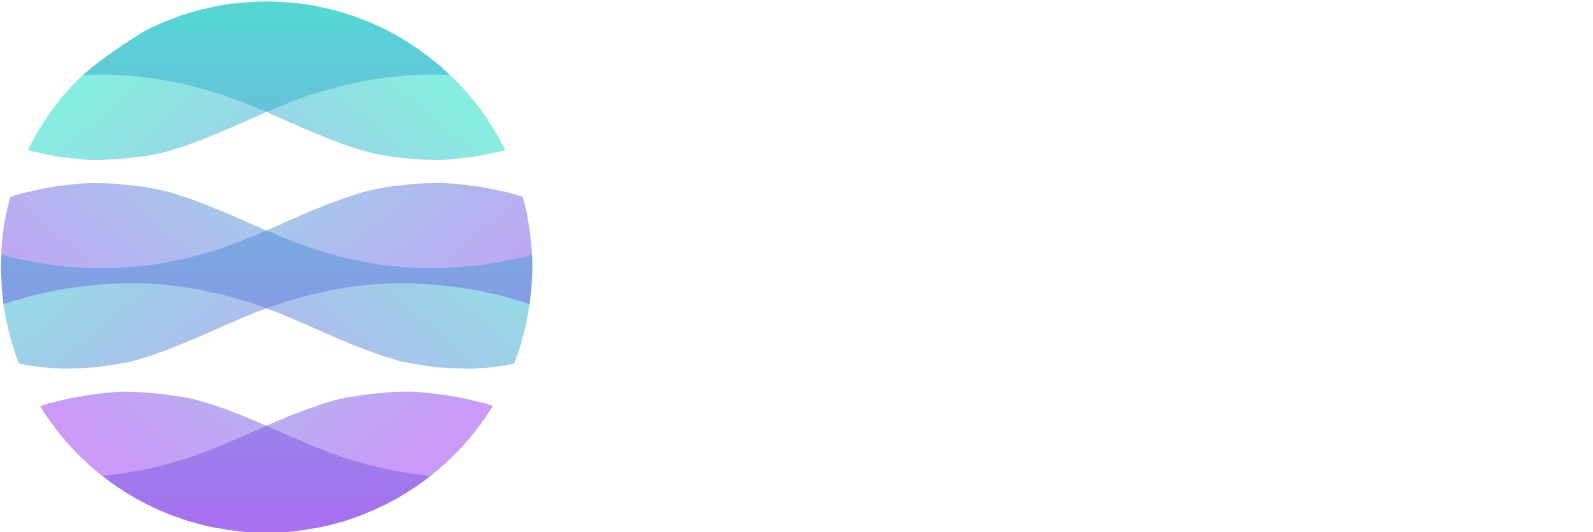 Integral-recruiting-logo